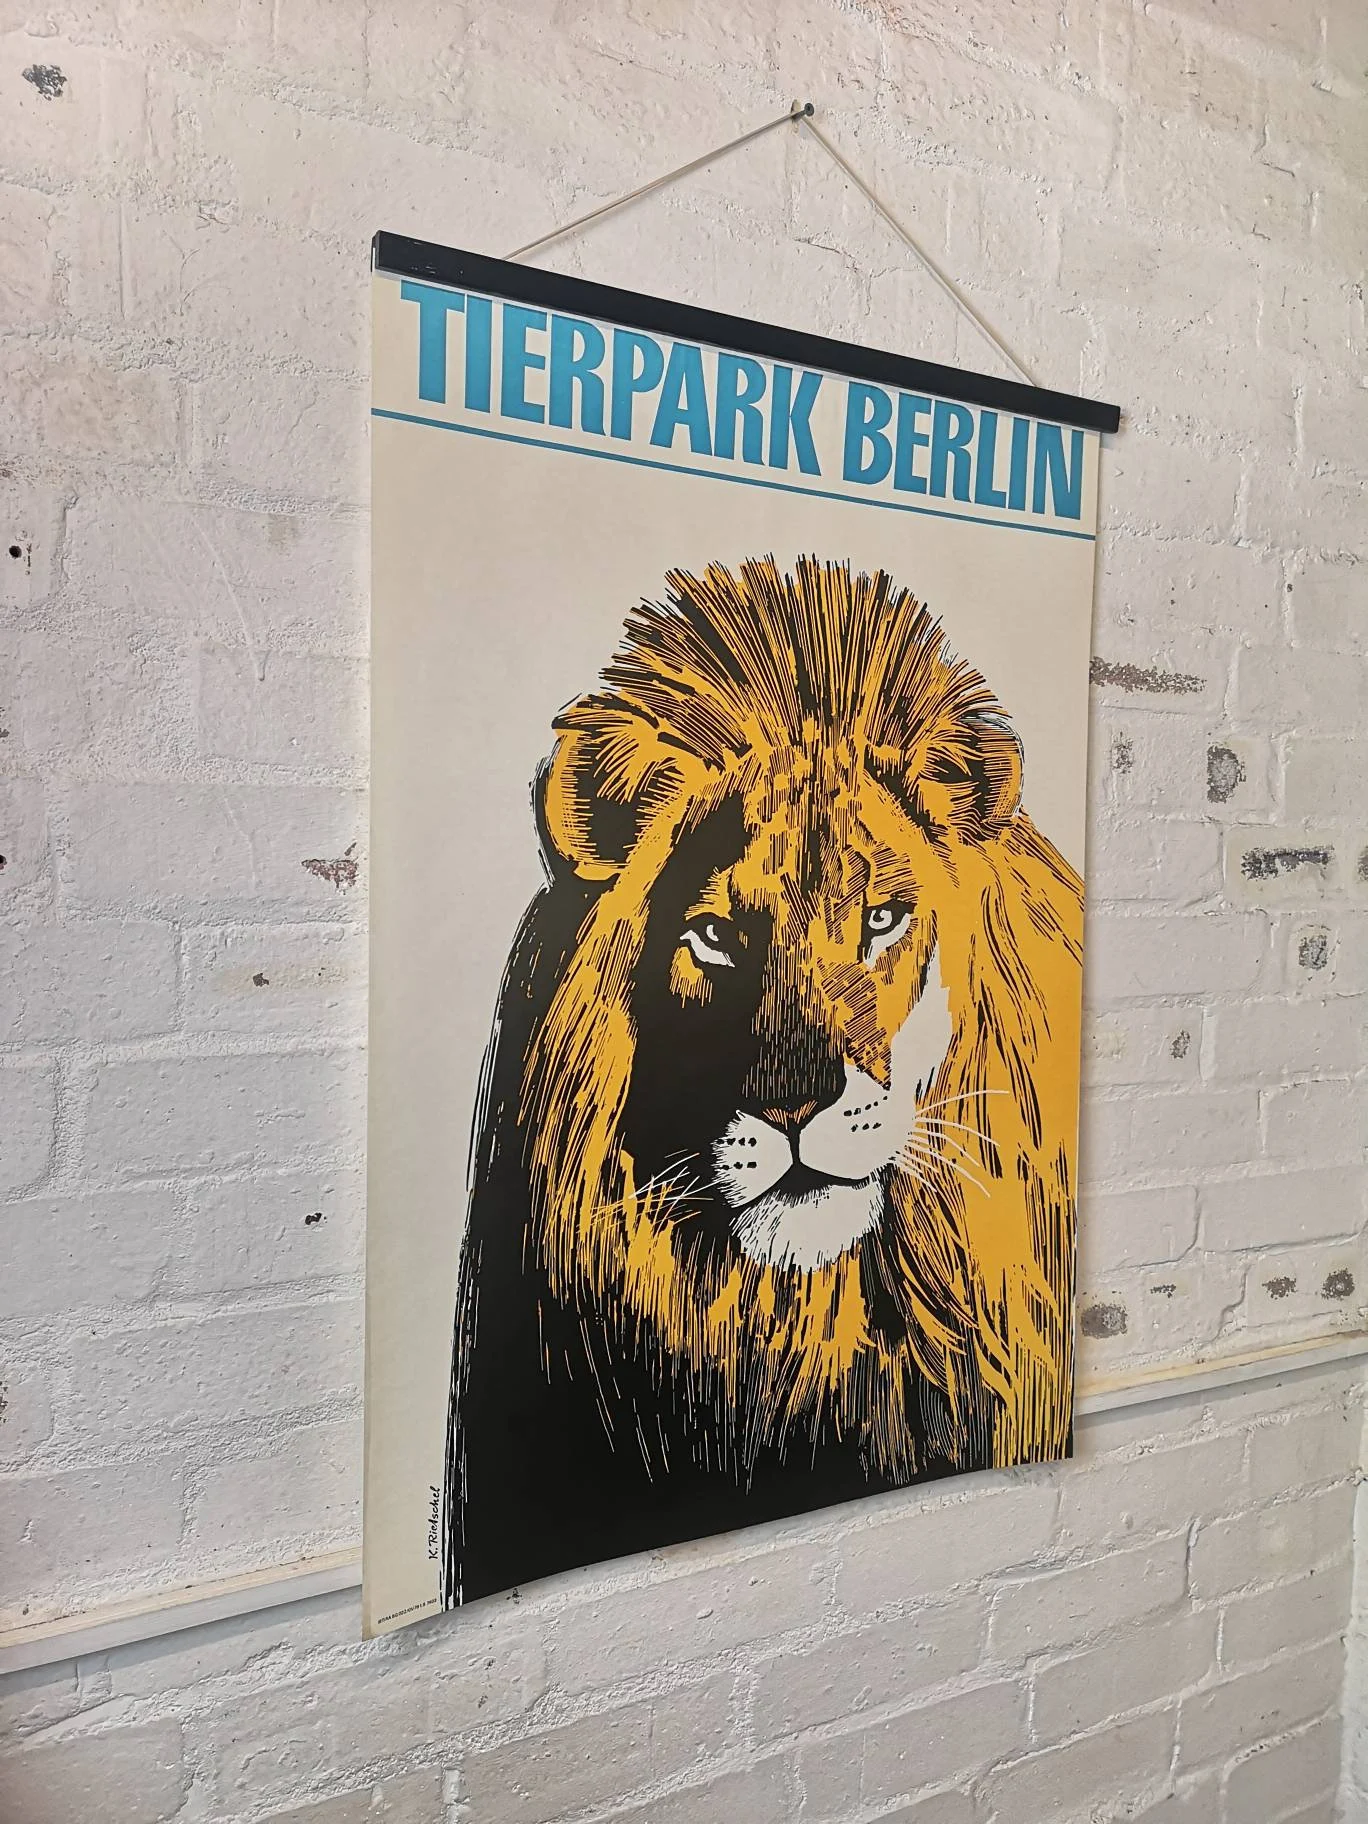 Vintage 1970s Tierpark Berlin Original Zoo Poster Advertising Of A Lion